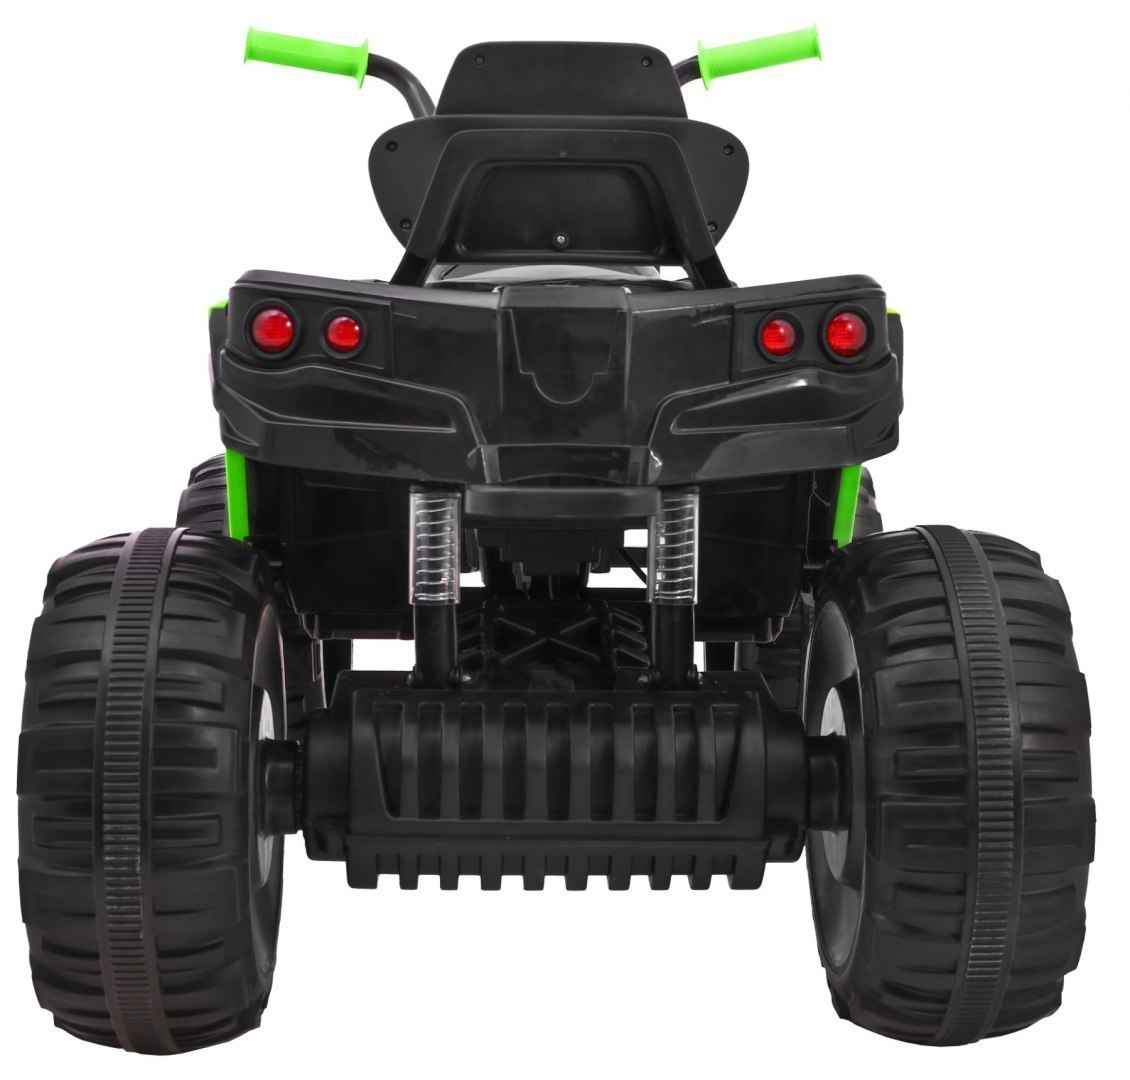 Pojazd Quad ATV 2.4G Czarno-Zielony